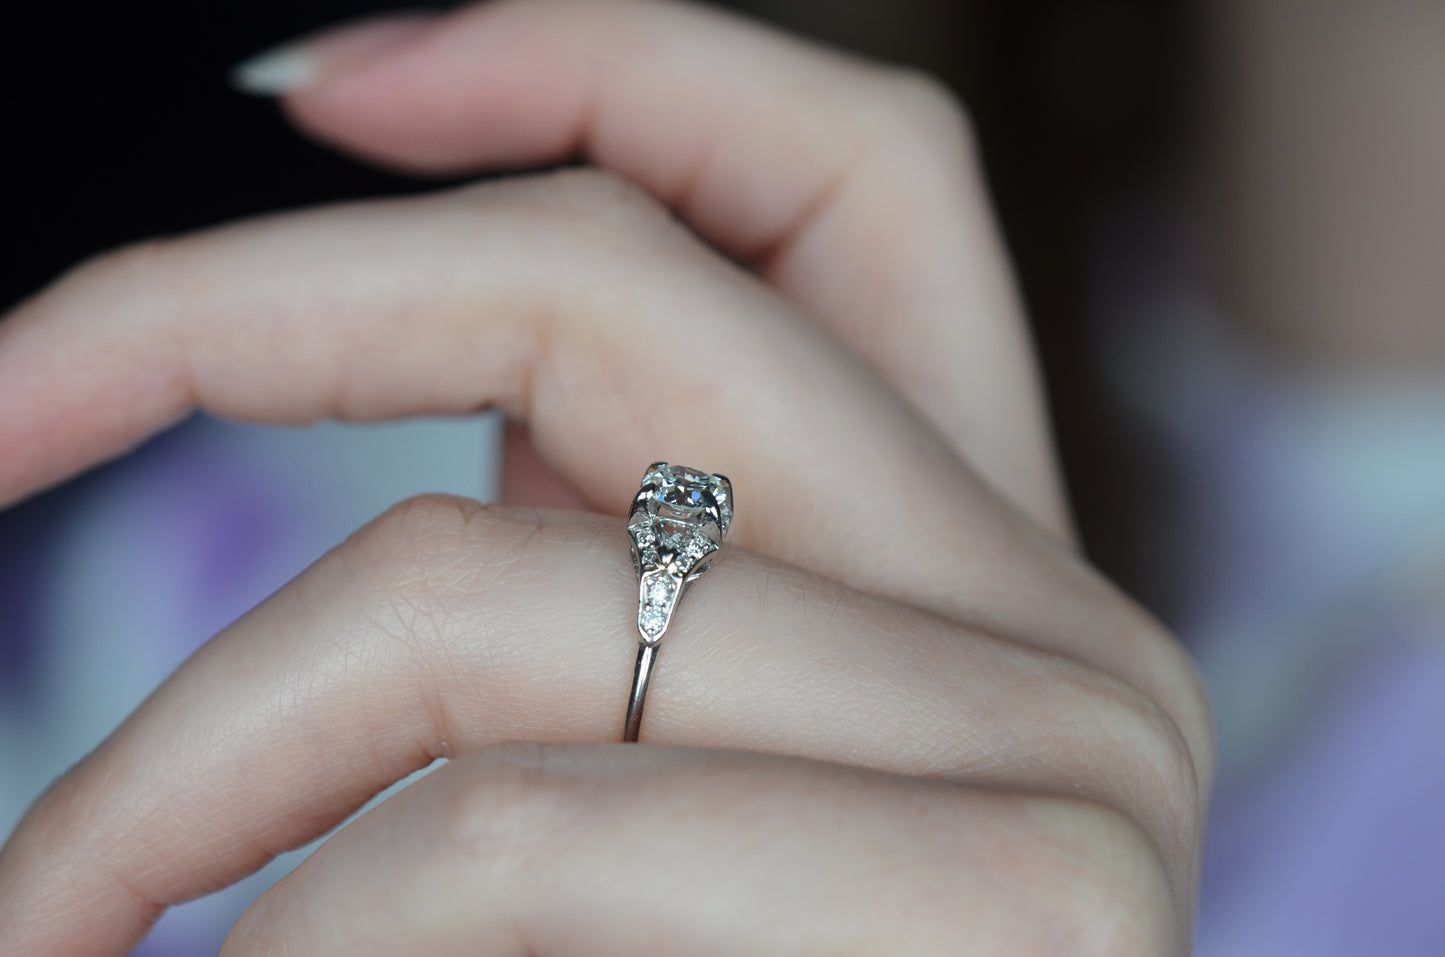 Striking Diamond Engagement Ring Nov '38